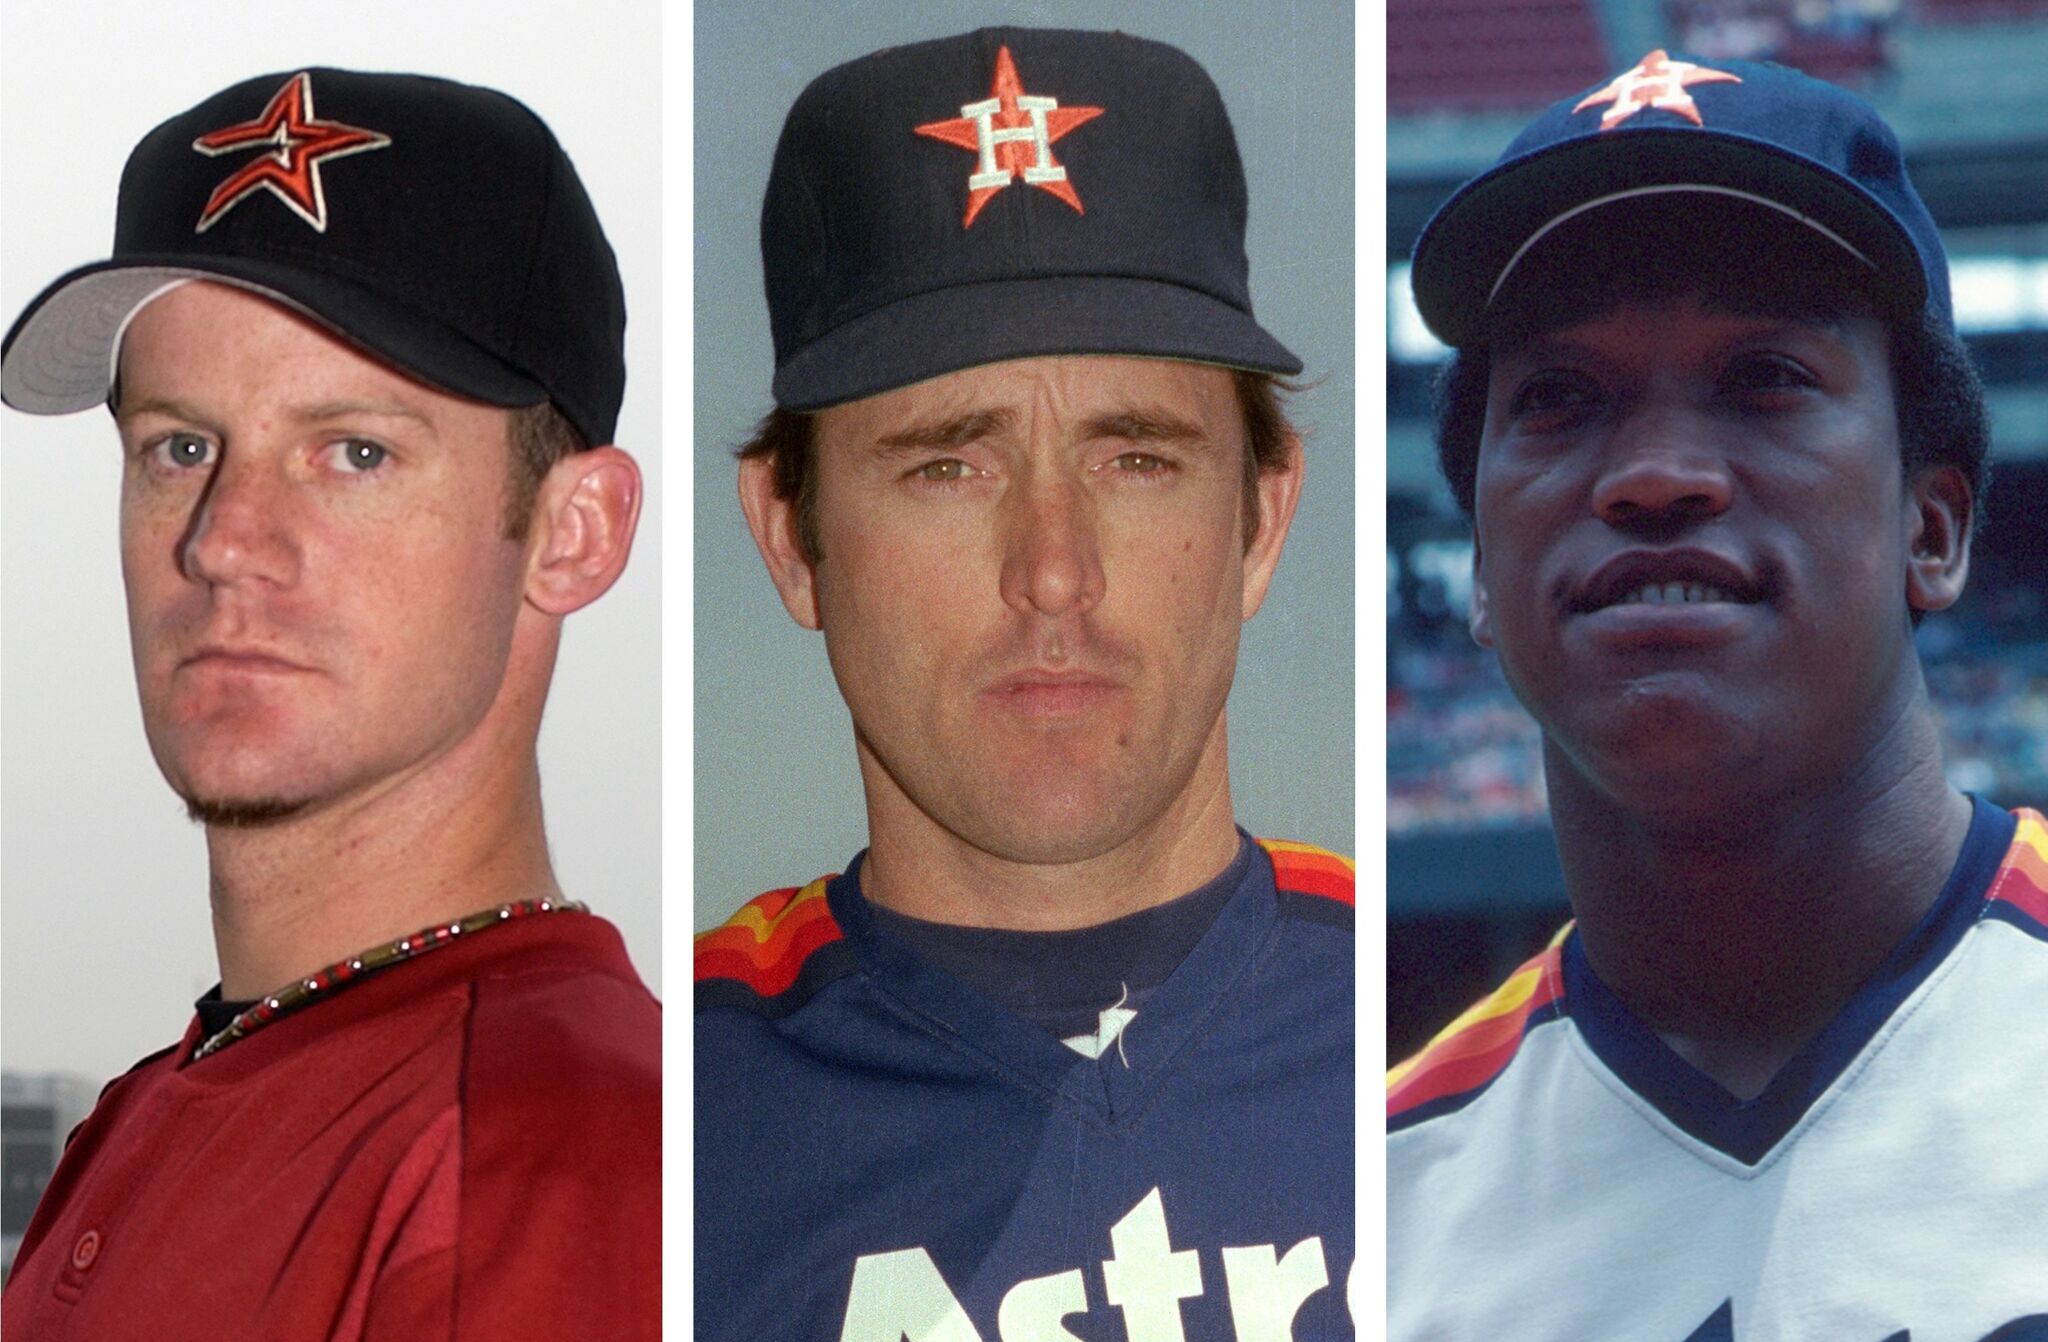 Brad Lidge Jersey - Houston Astros 2005 Home Throwback MLB Baseball Jersey